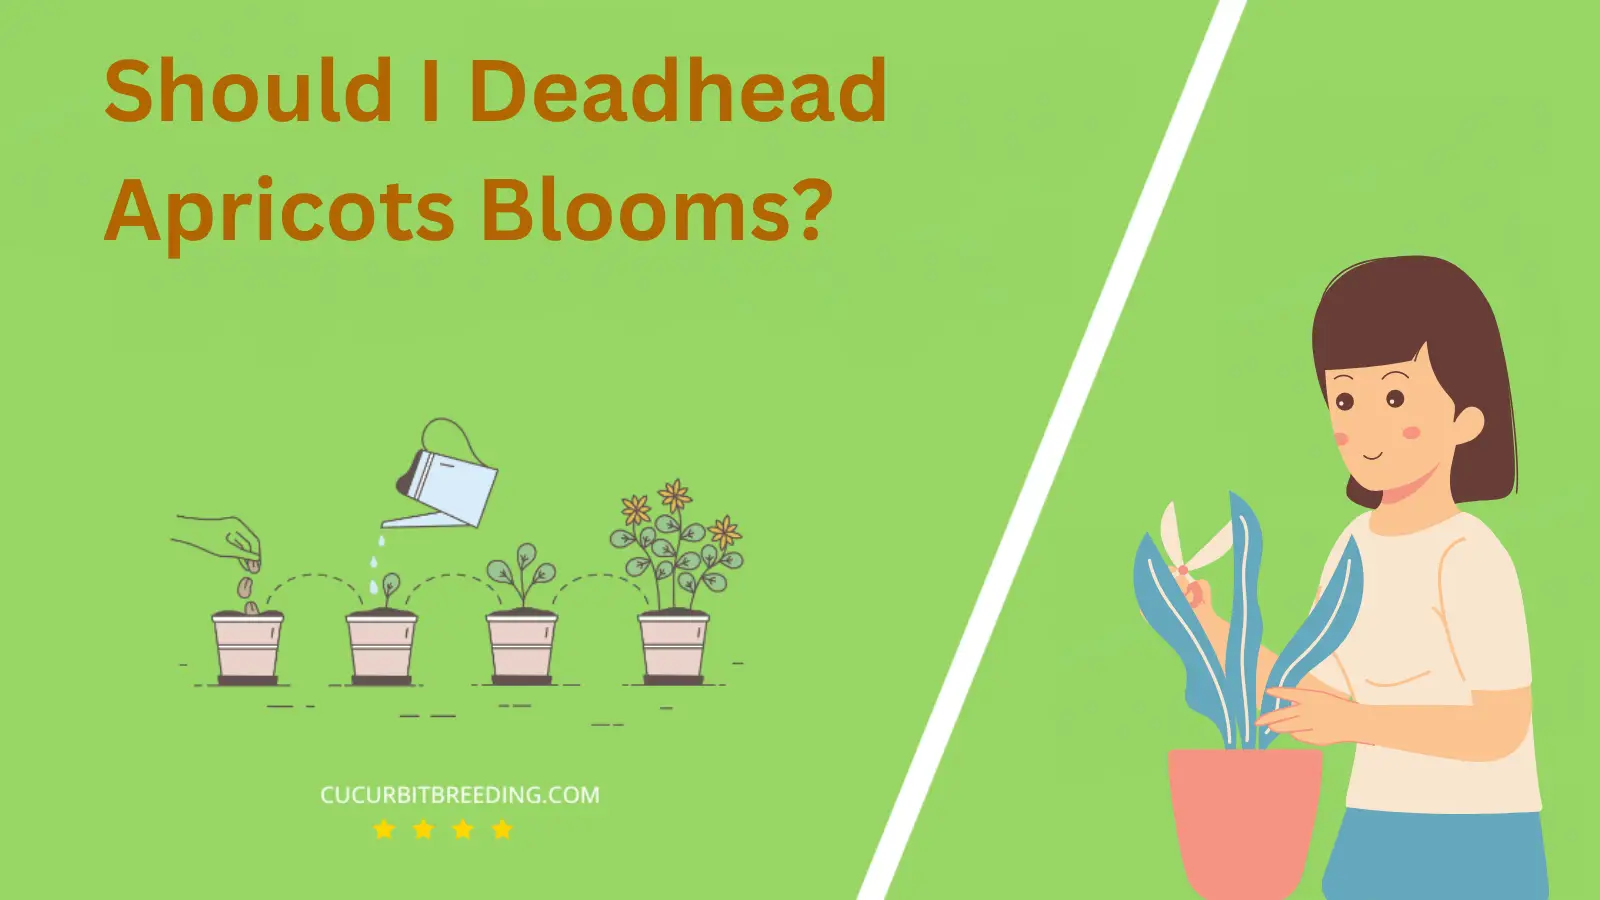 Should I Deadhead Apricots Blooms?